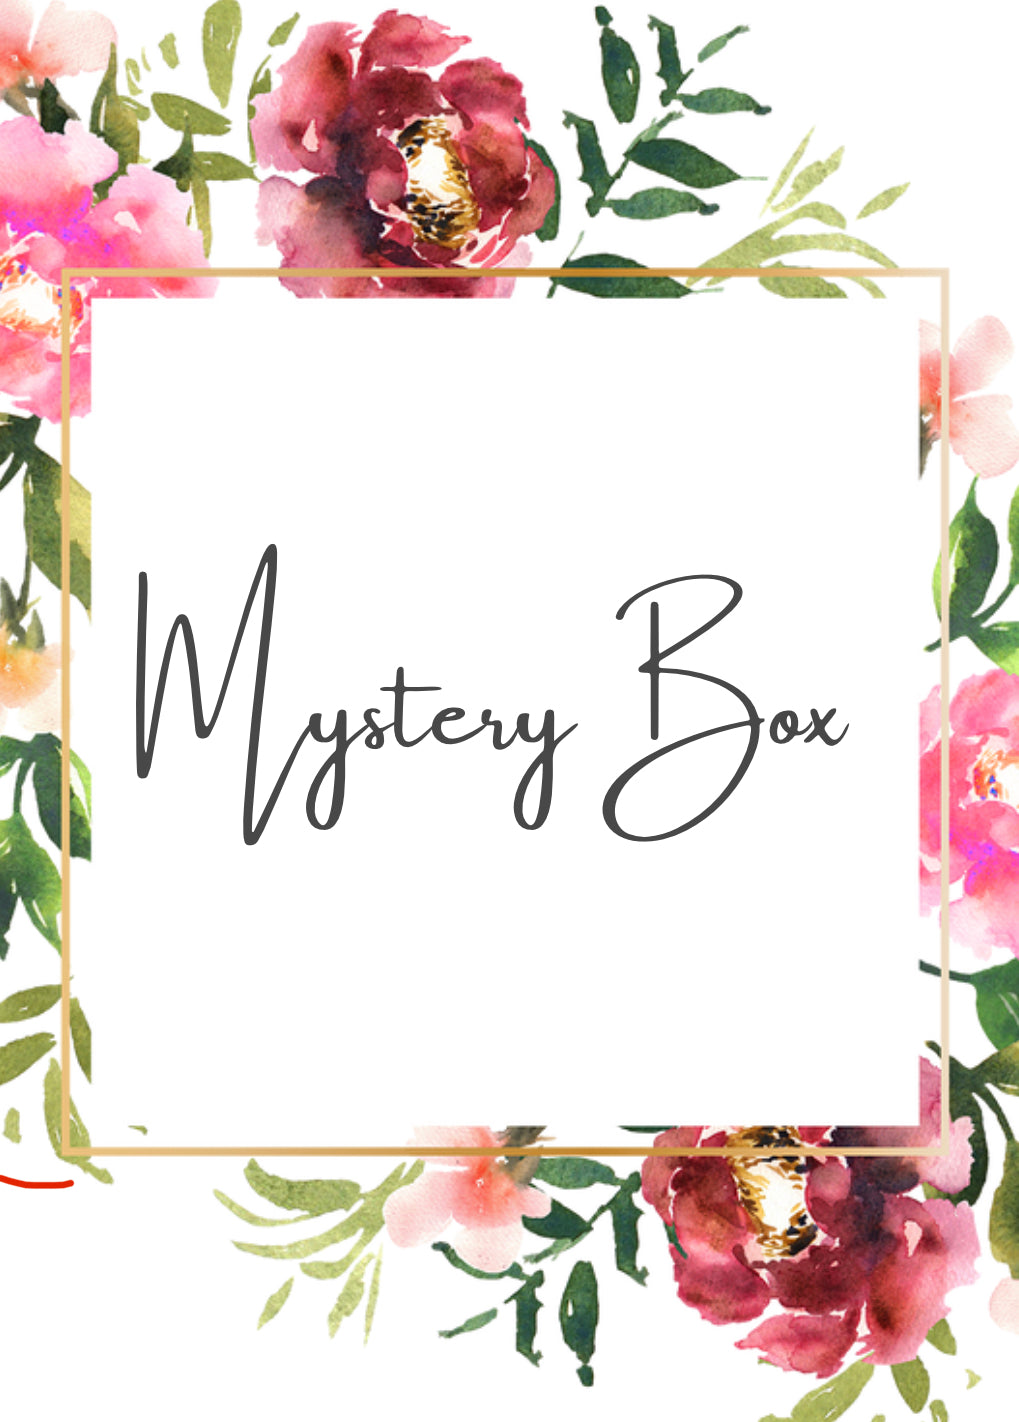 Mystery Box’s